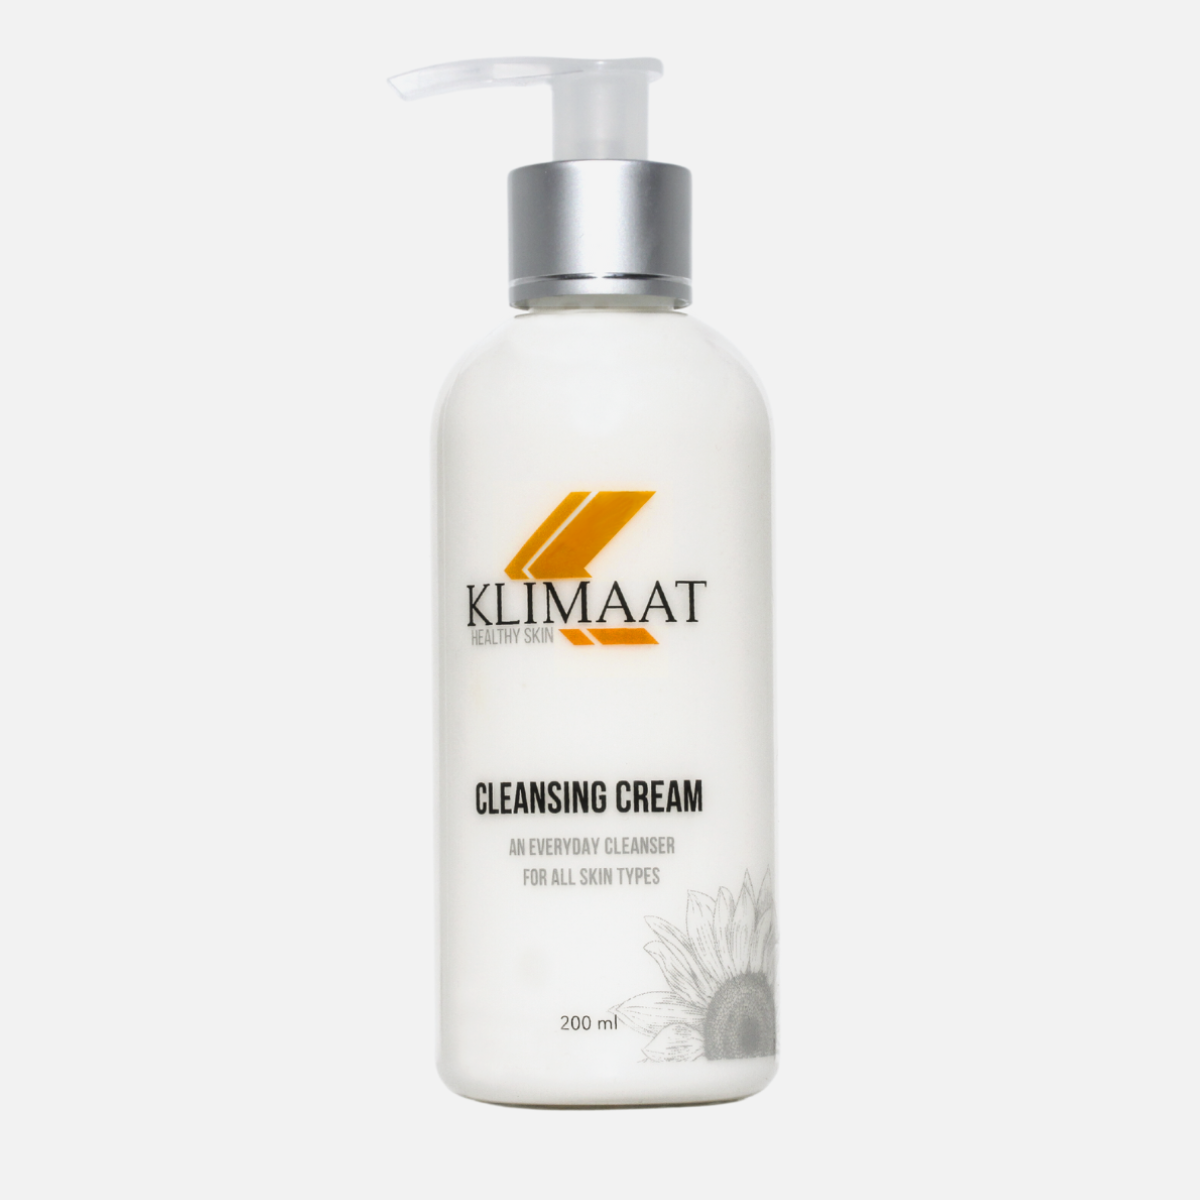 Klimaat Cleansing Cream